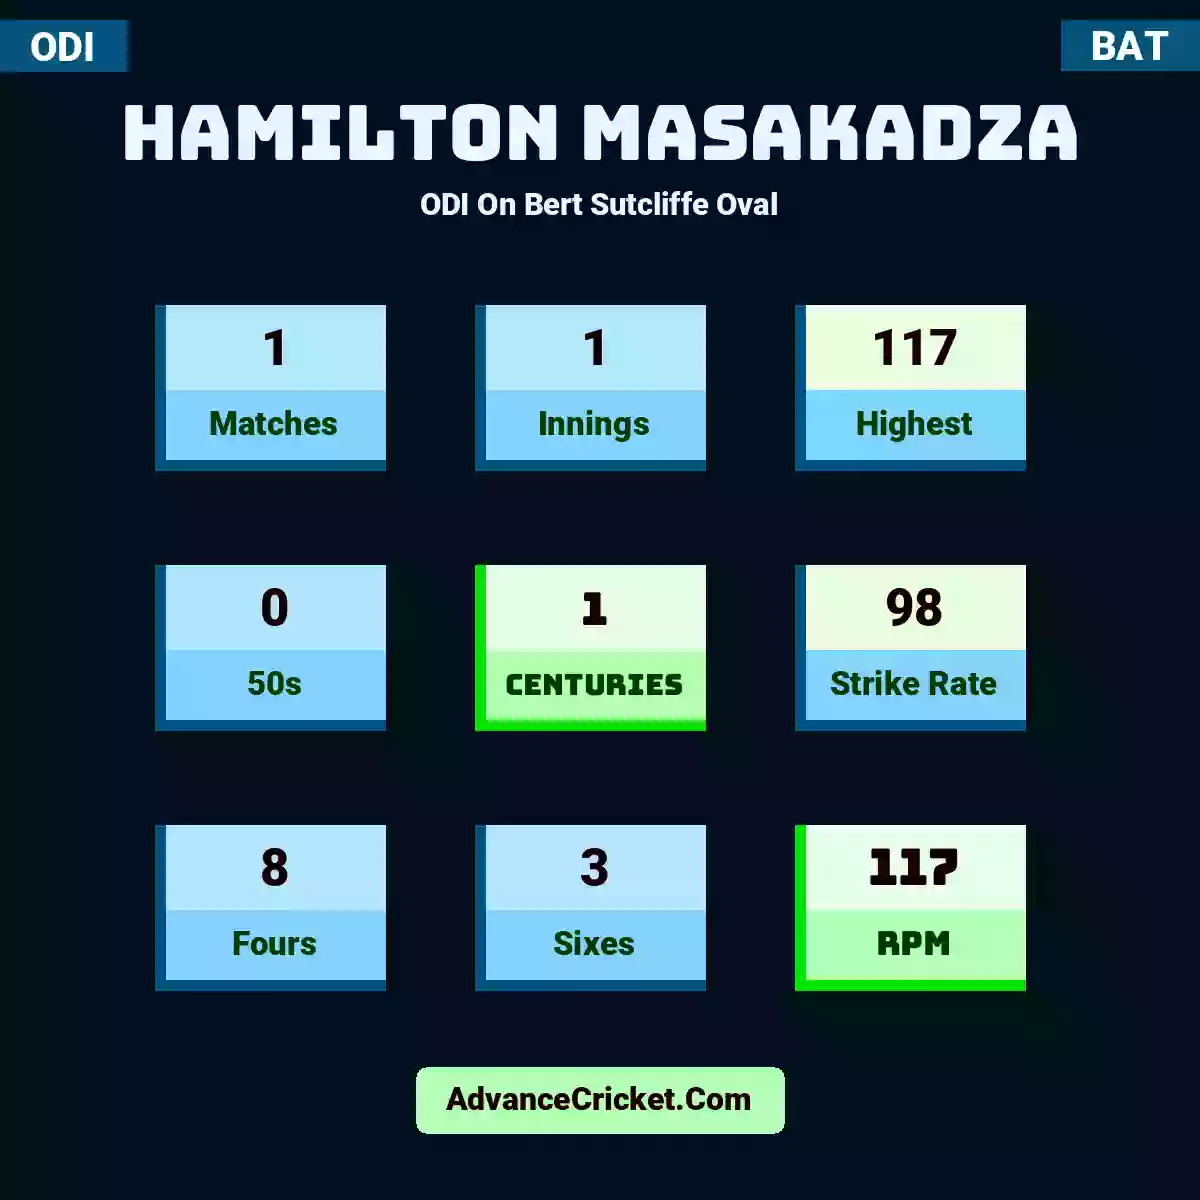 Hamilton Masakadza ODI  On Bert Sutcliffe Oval, Hamilton Masakadza played 1 matches, scored 117 runs as highest, 0 half-centuries, and 1 centuries, with a strike rate of 98. H.Masakadza hit 8 fours and 3 sixes, with an RPM of 117.